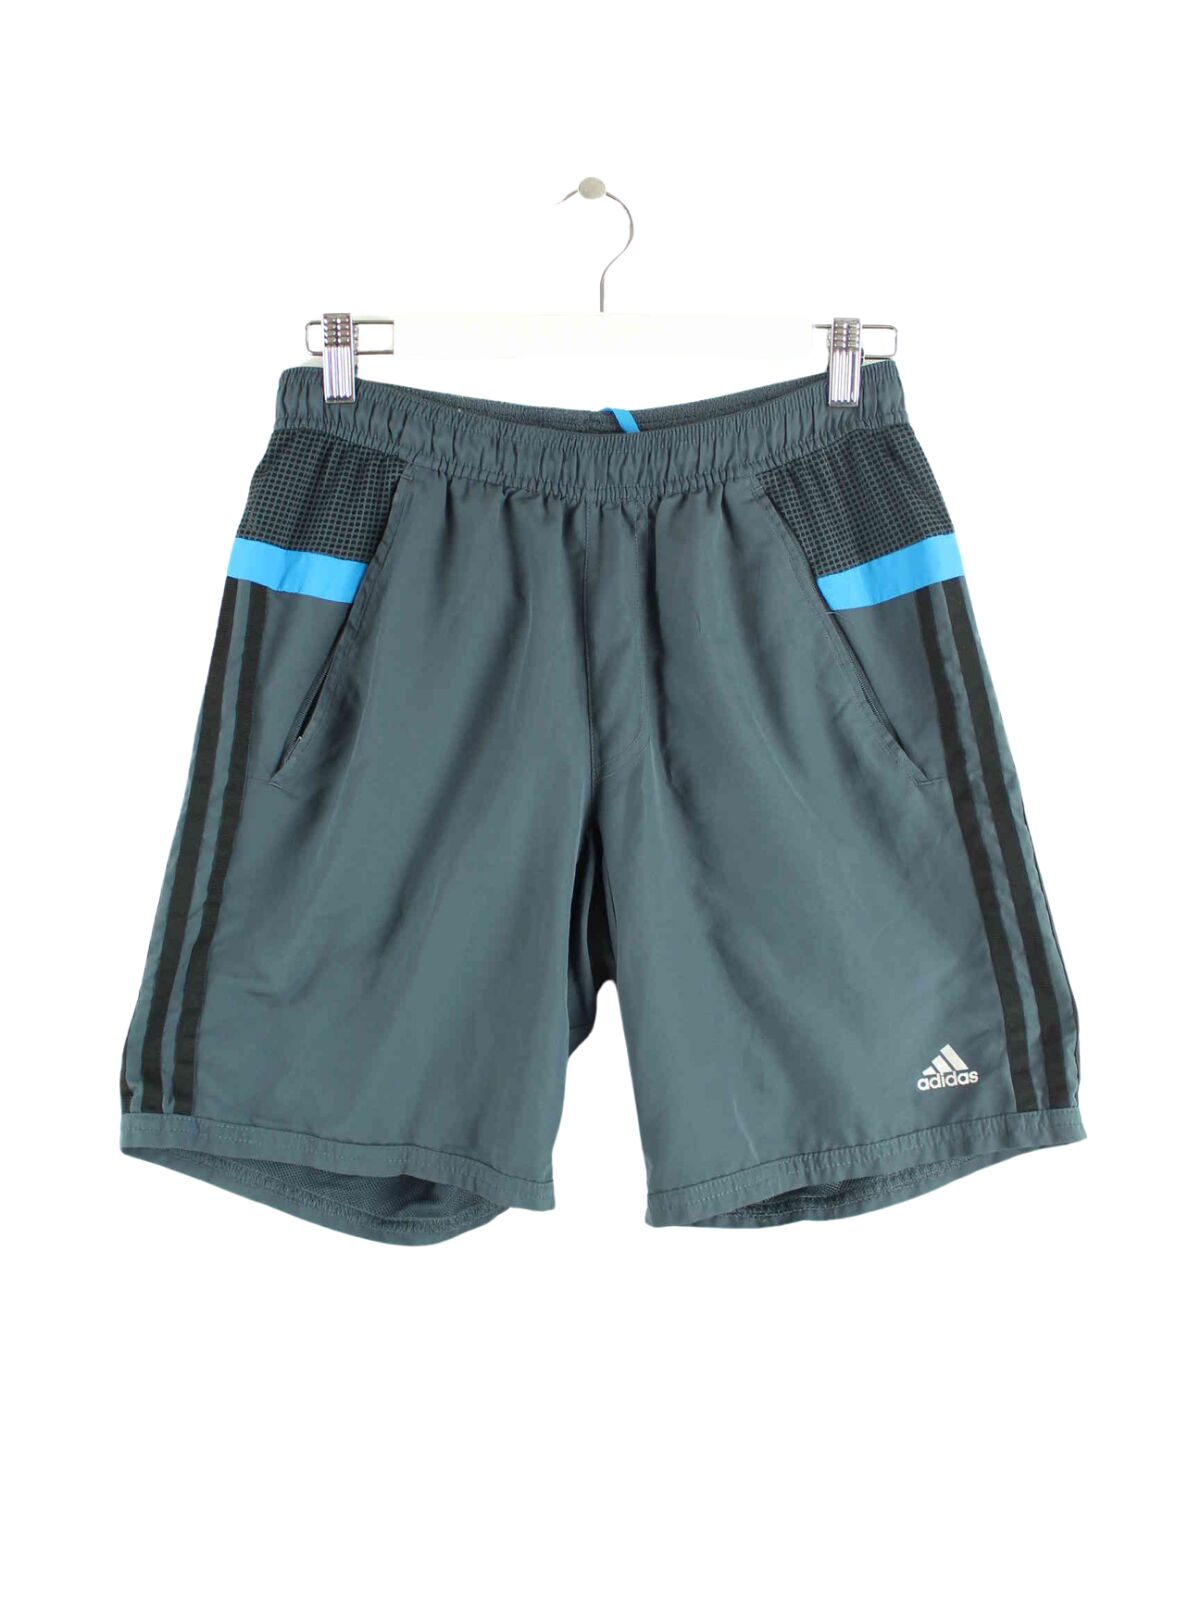 Adidas Shorts Grau S (front image)